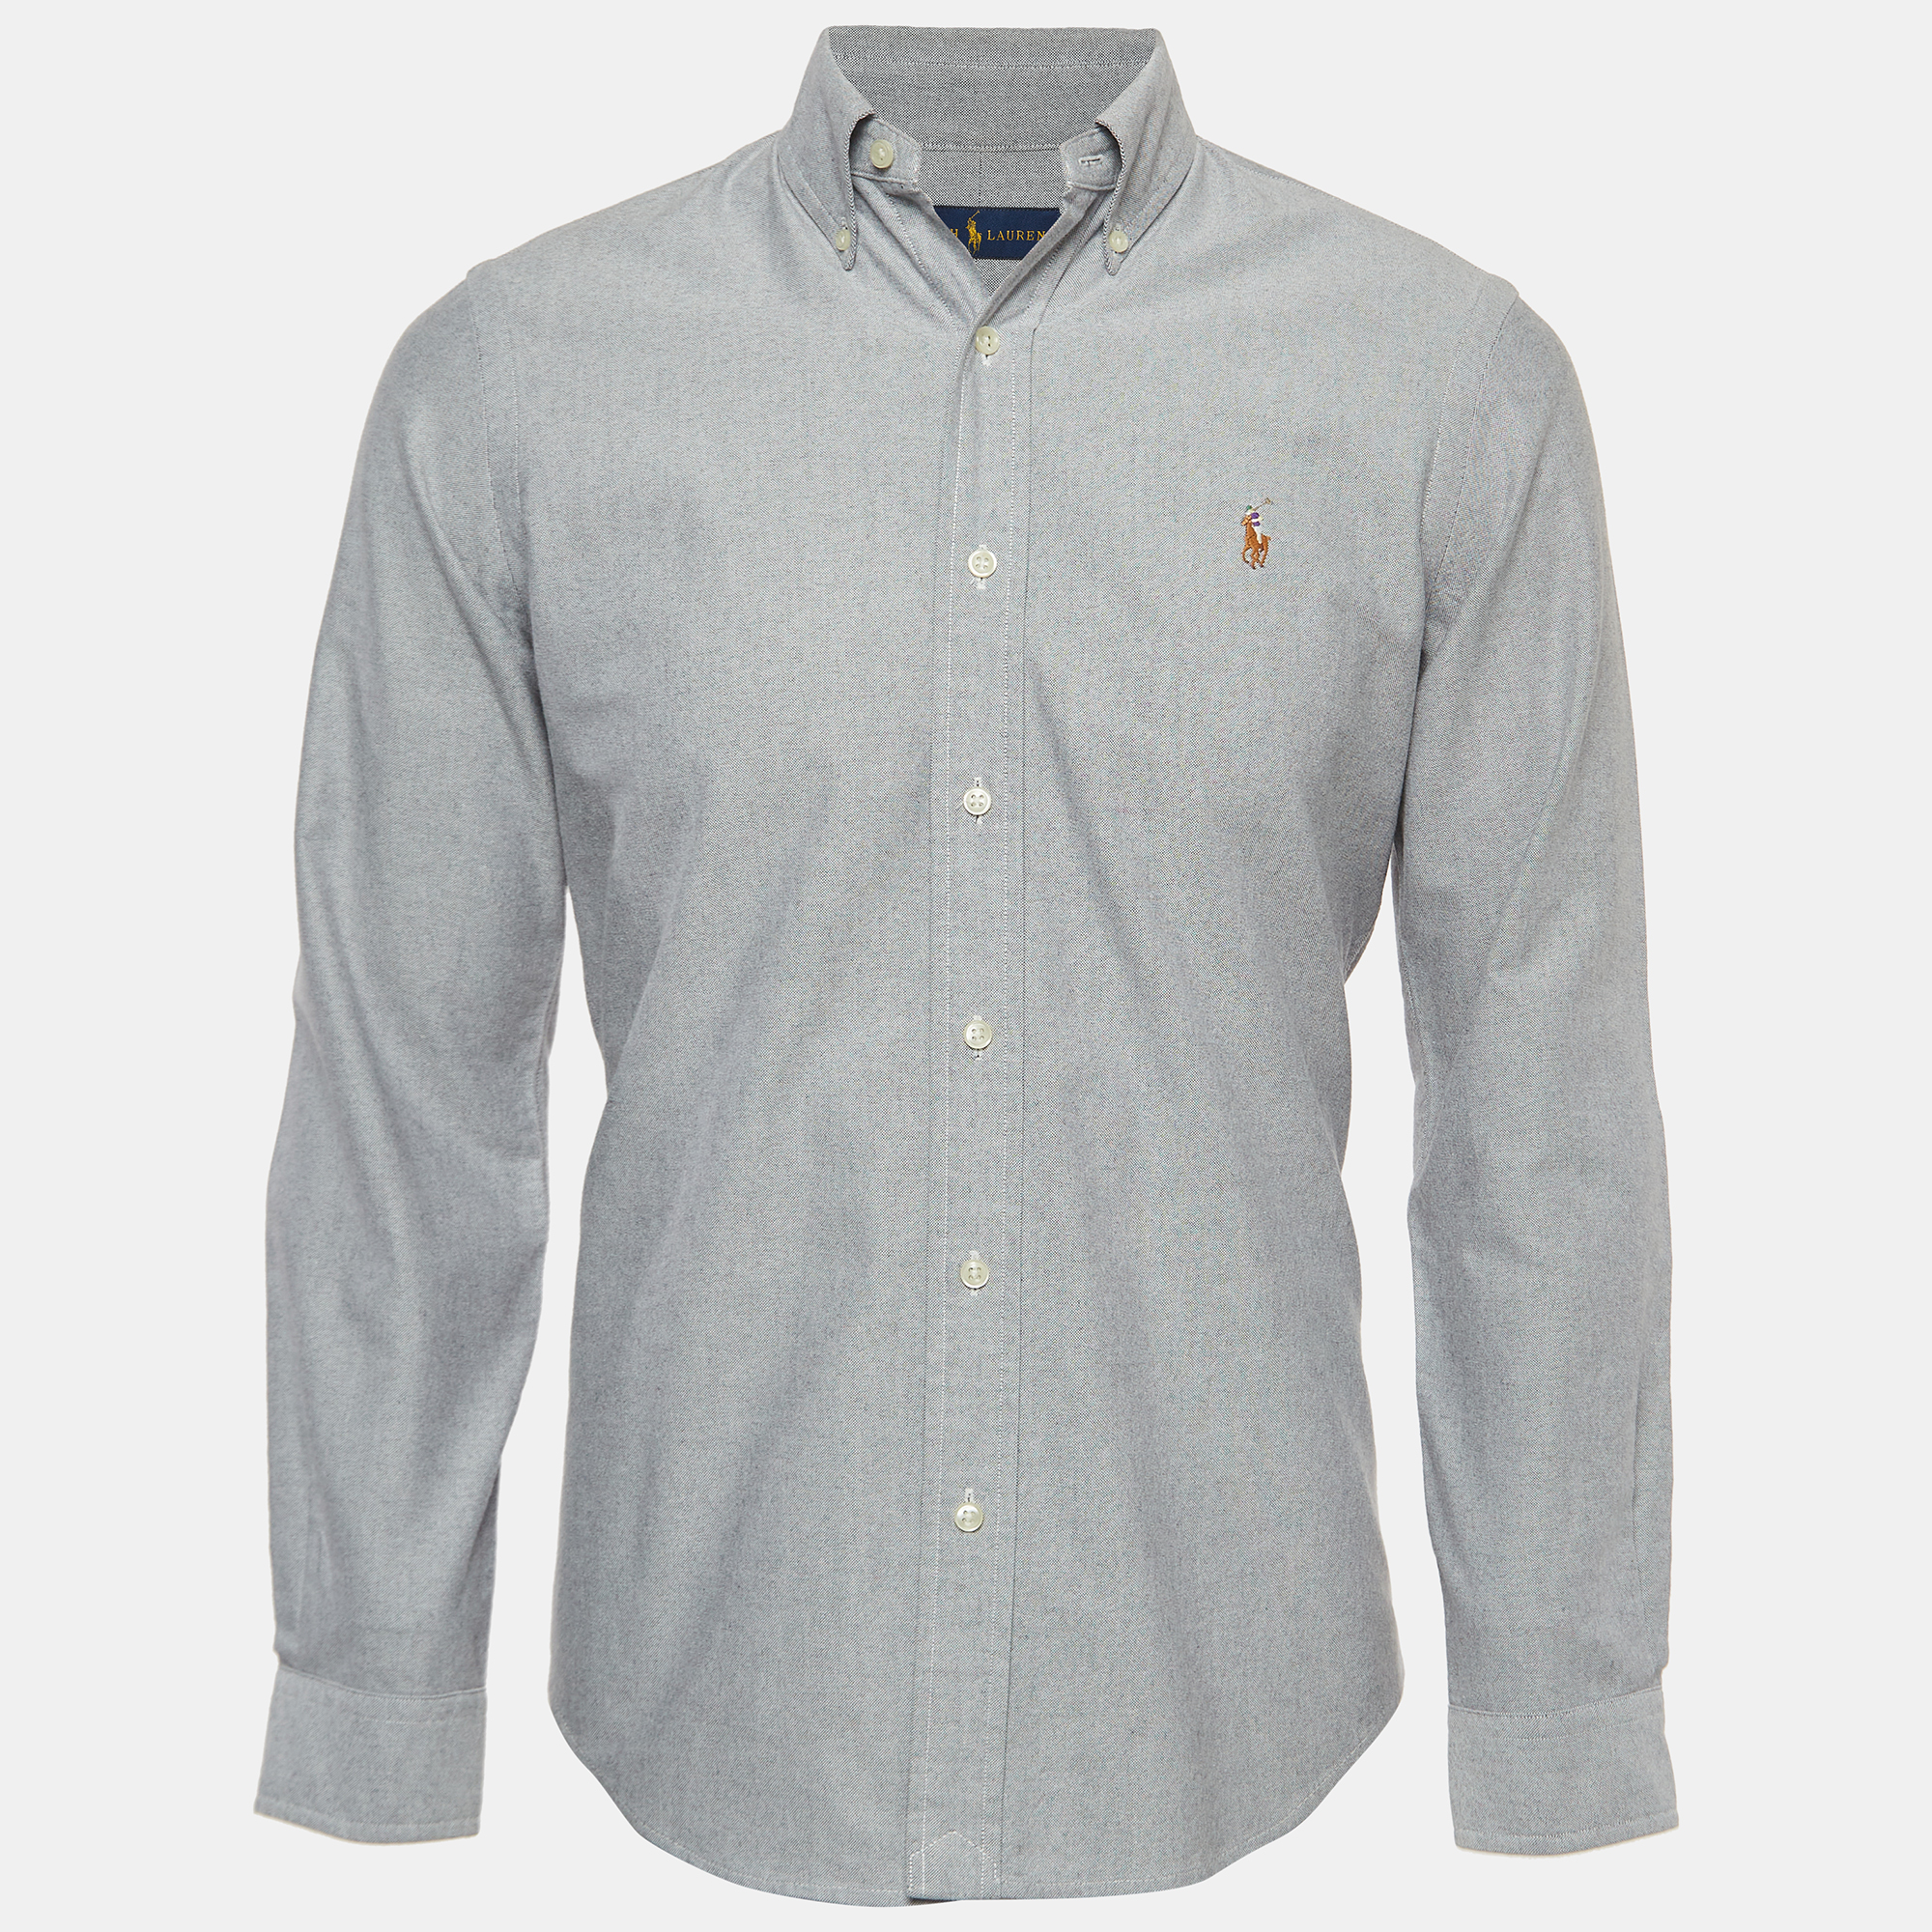 Polo ralph lauren grey cotton button down full sleeve shirt s